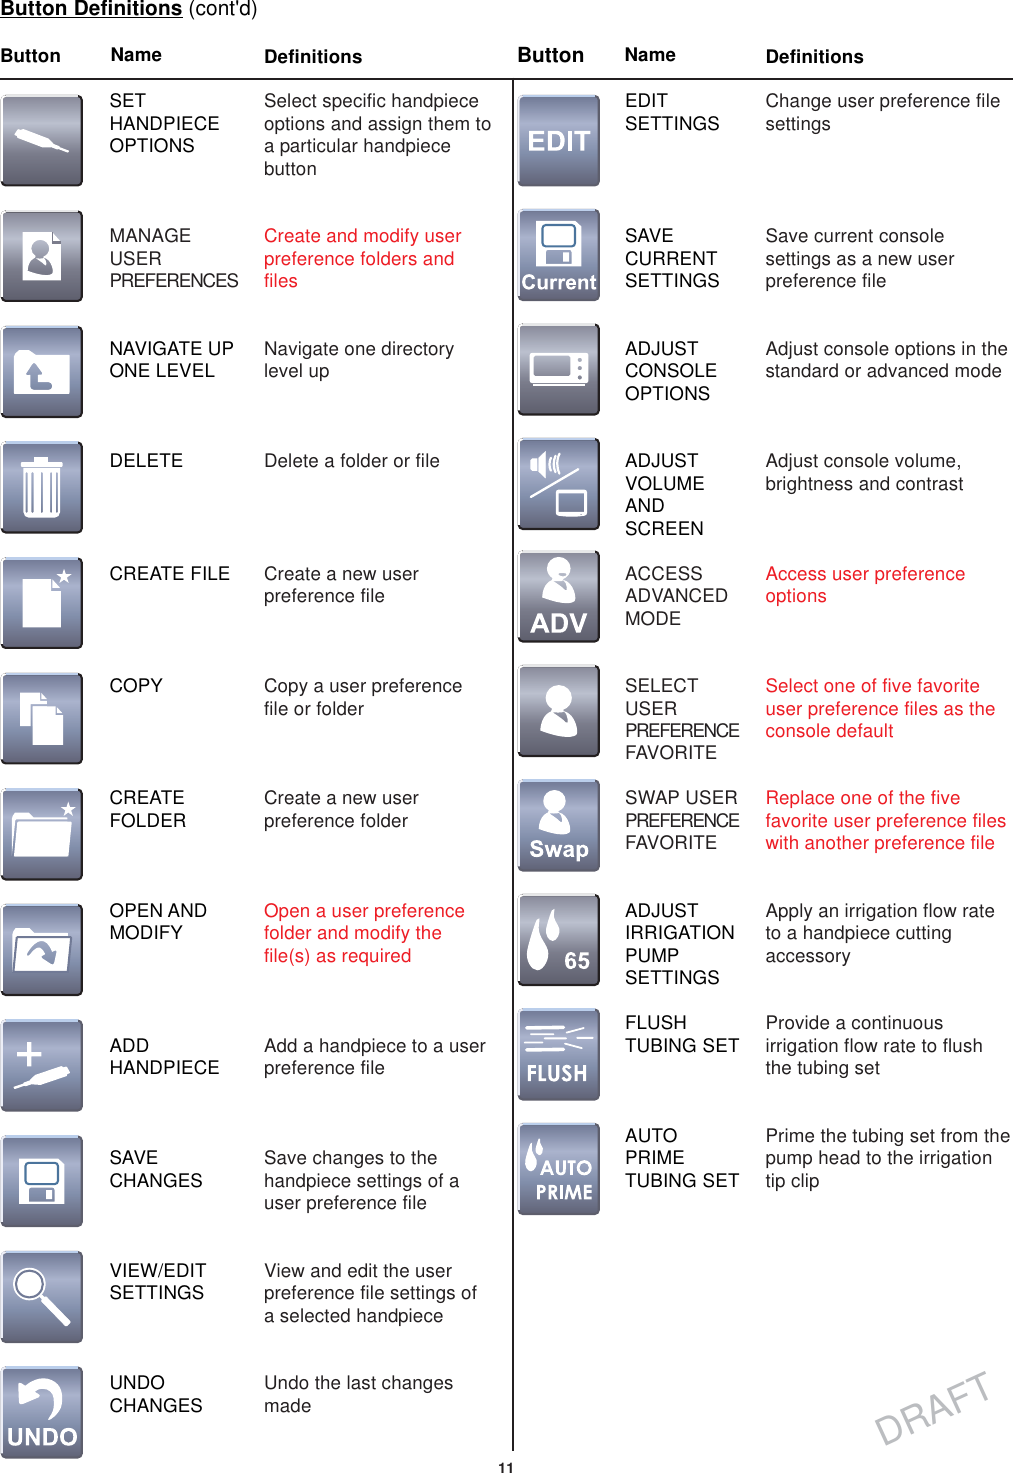 stryker core console manual pdf